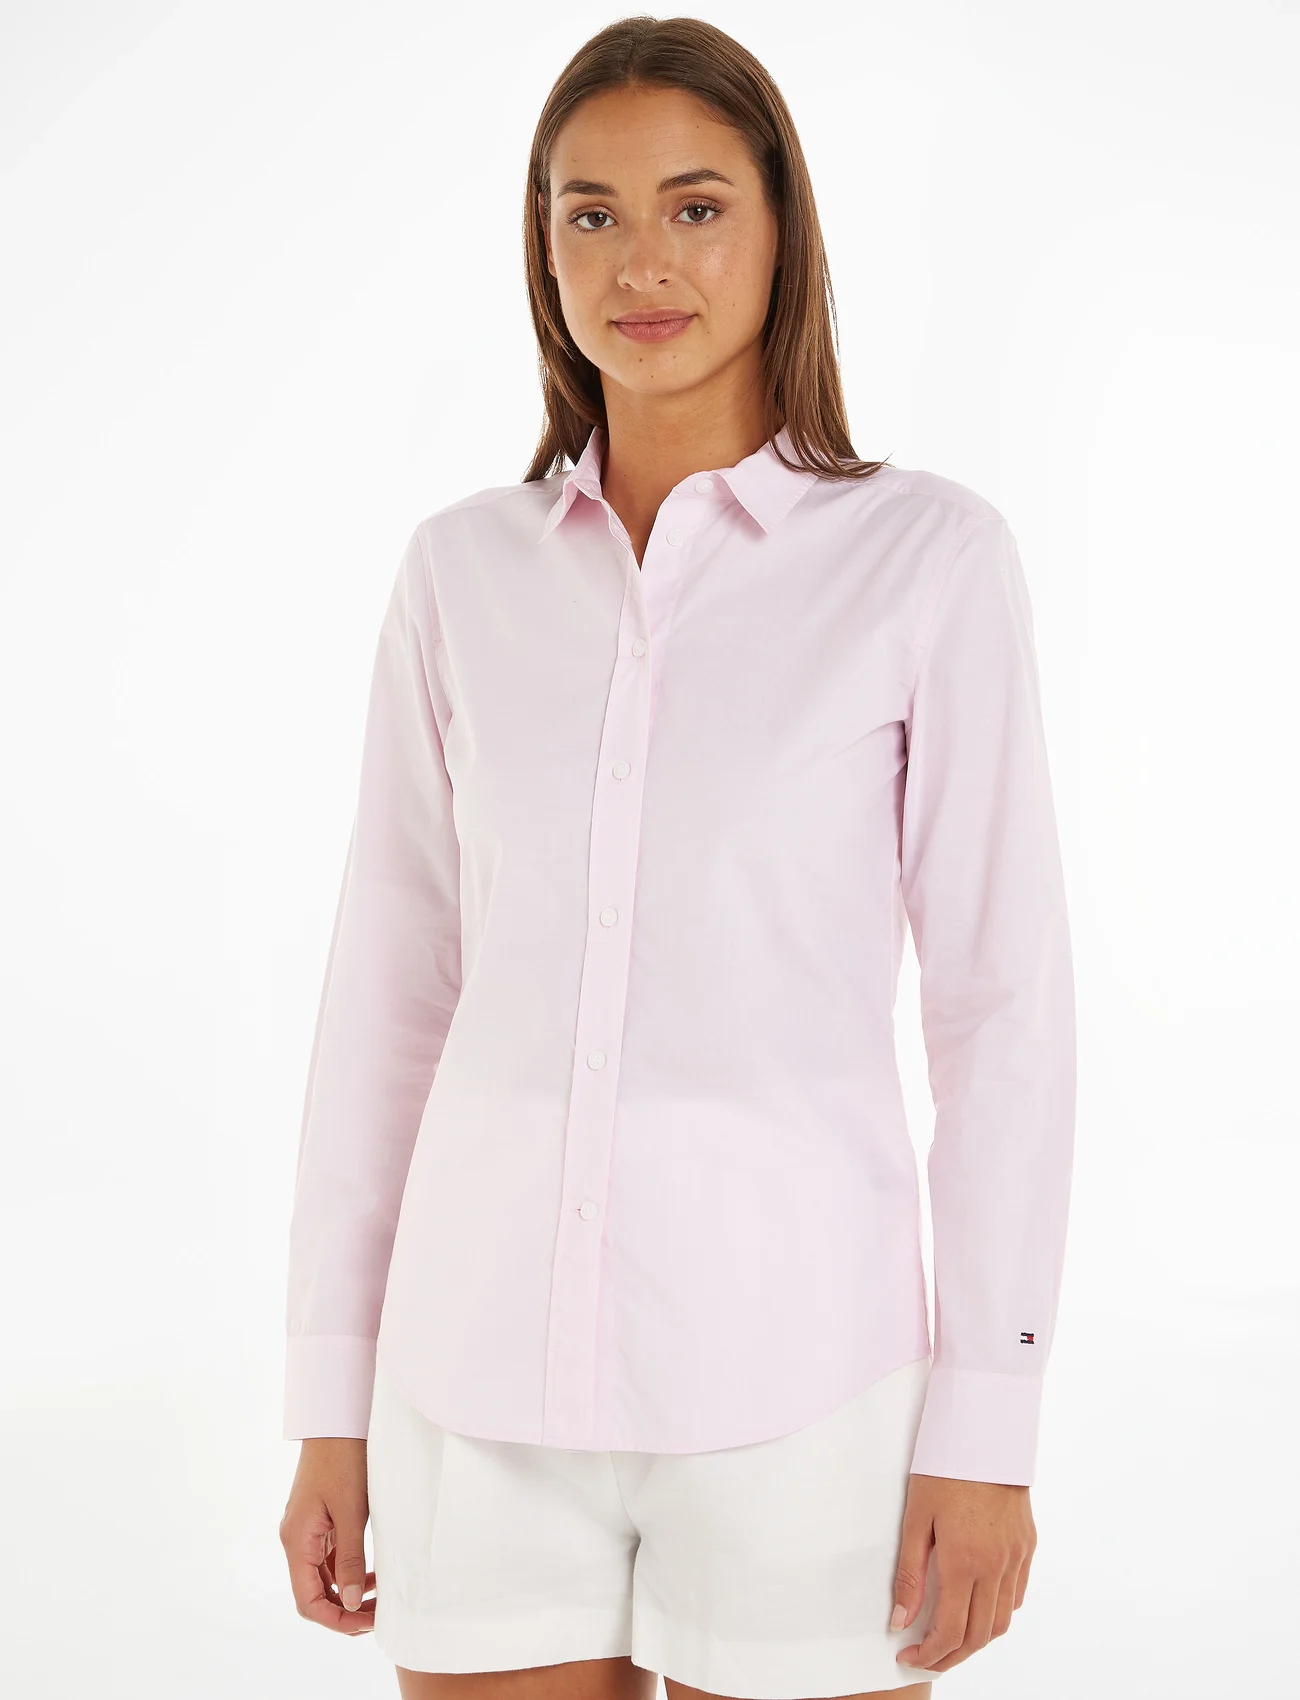 Tommy Hilfiger - ORG CO POPLIN REGULAR SHIRT LS - langärmlige hemden - iconic pink - 1